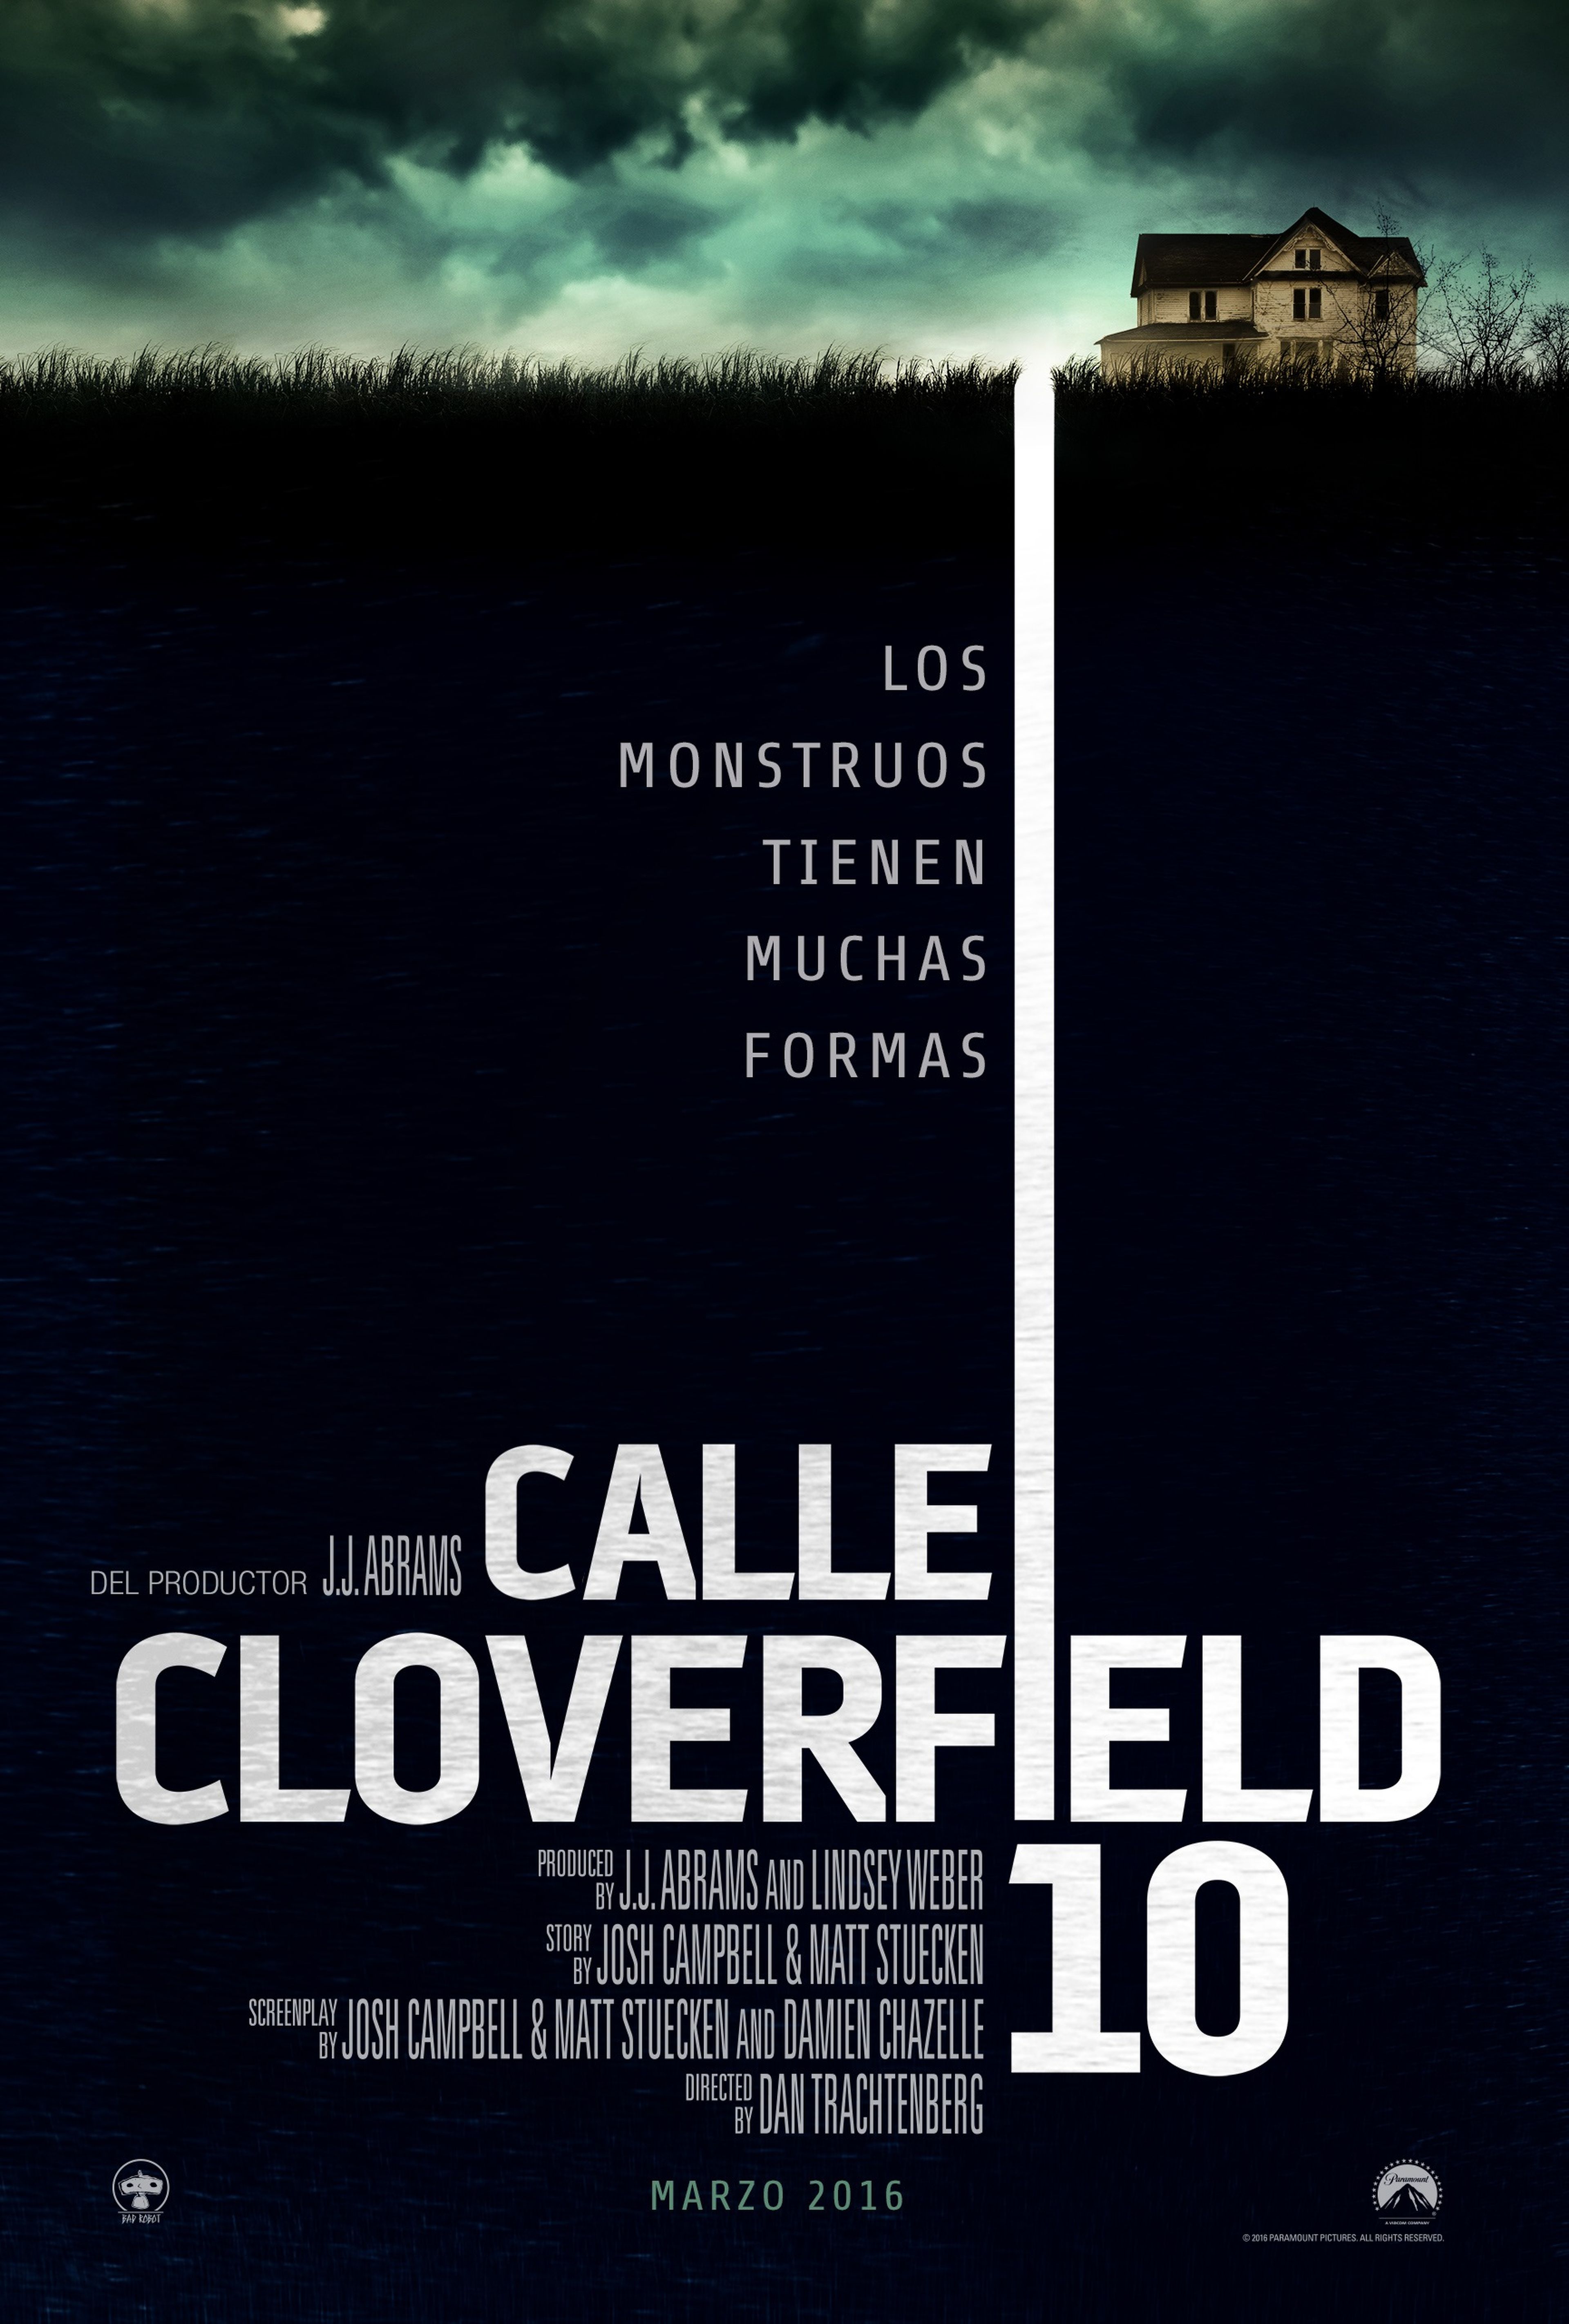 Calle Cloverfield 10: tráiler de la nueva película producida por Abrams con John Goodman